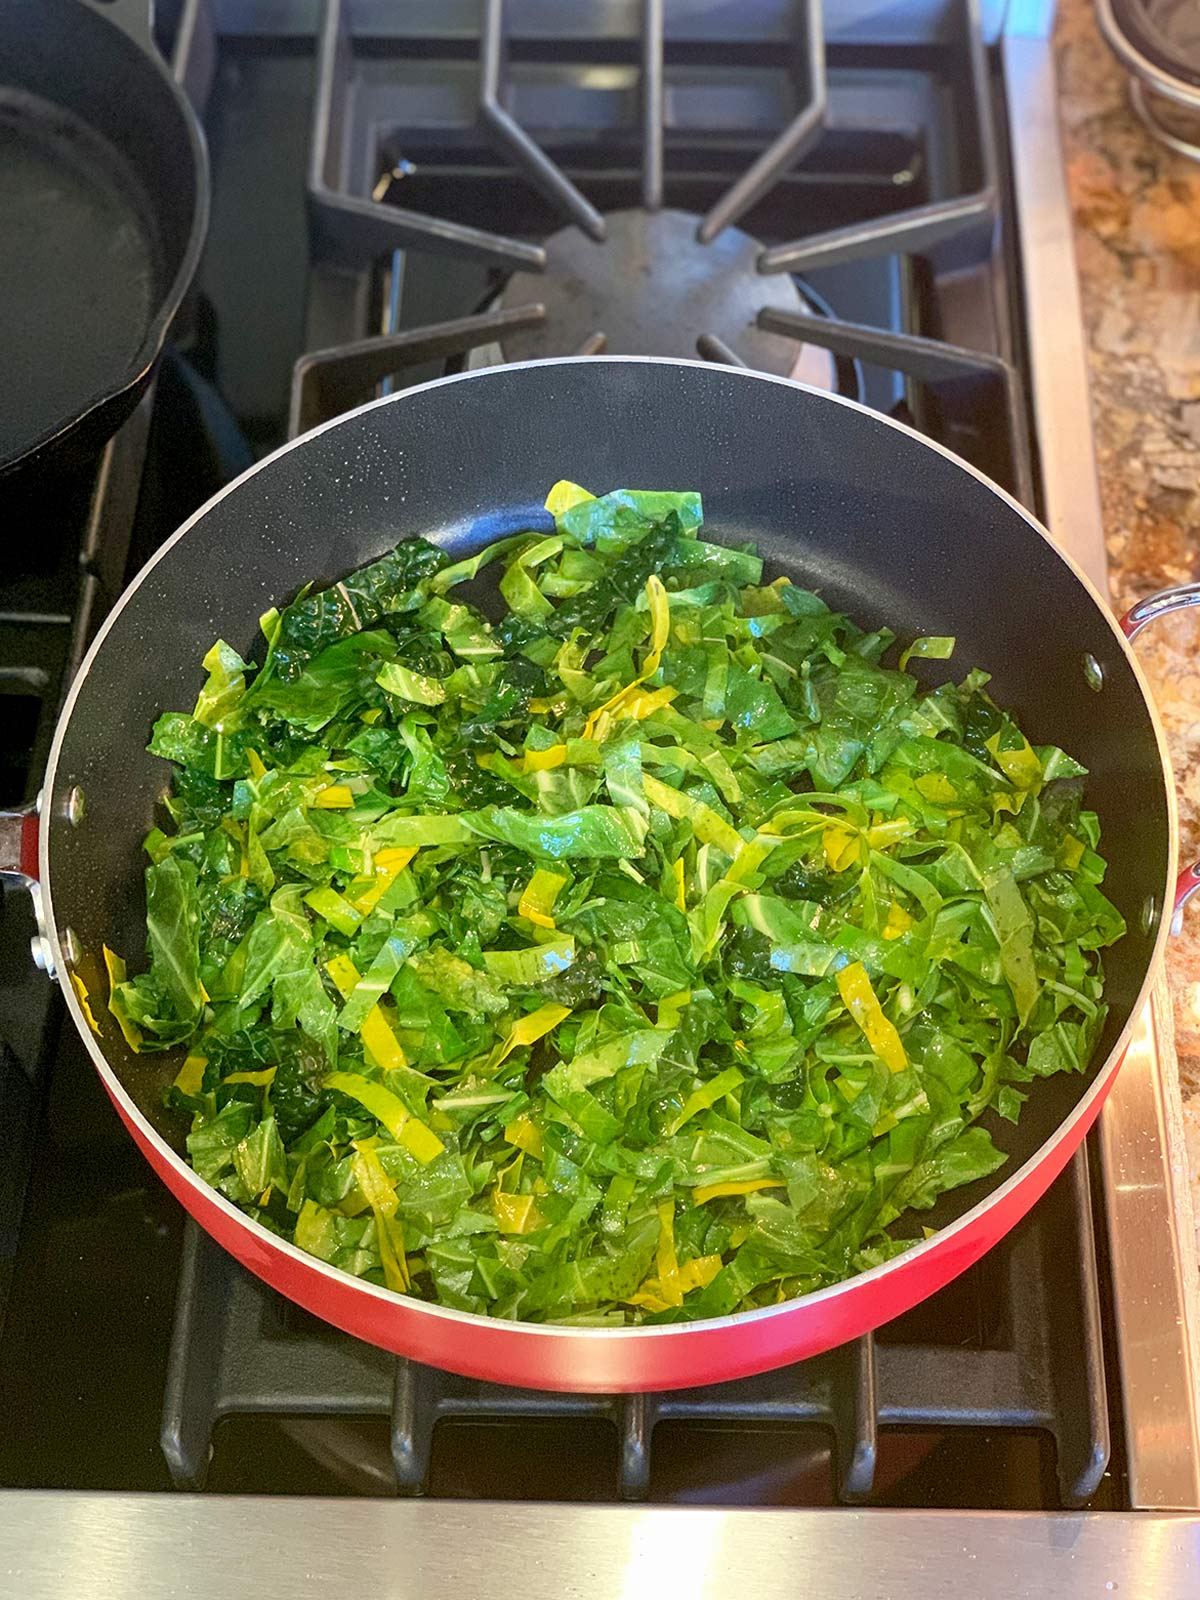 Sliced dark leafy greens in the saute pan.